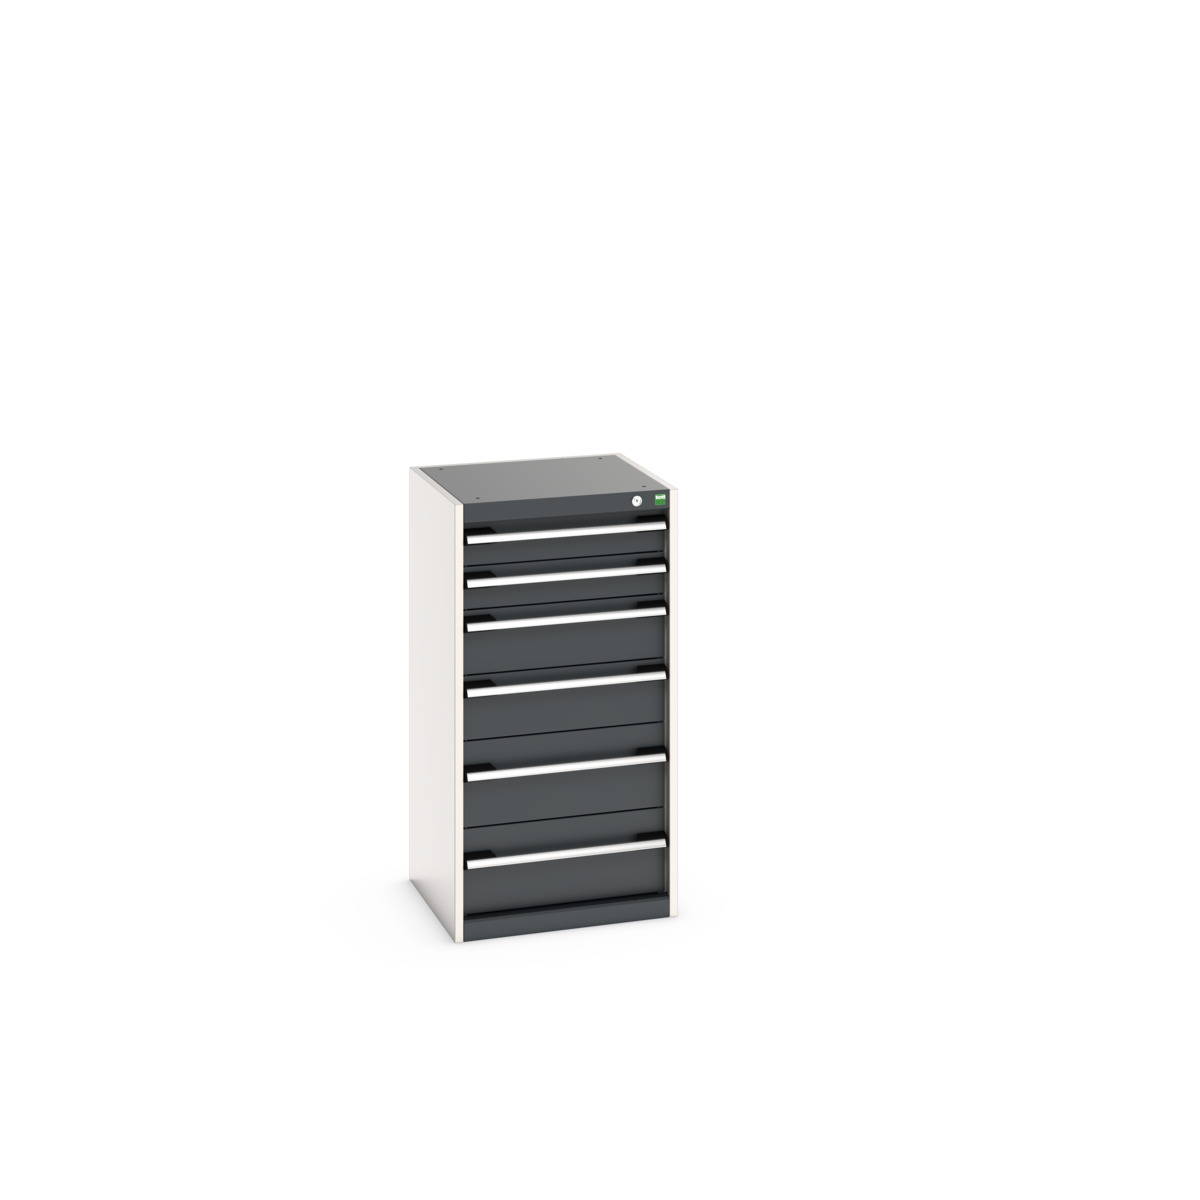 40010047. - cubio drawer cabinet